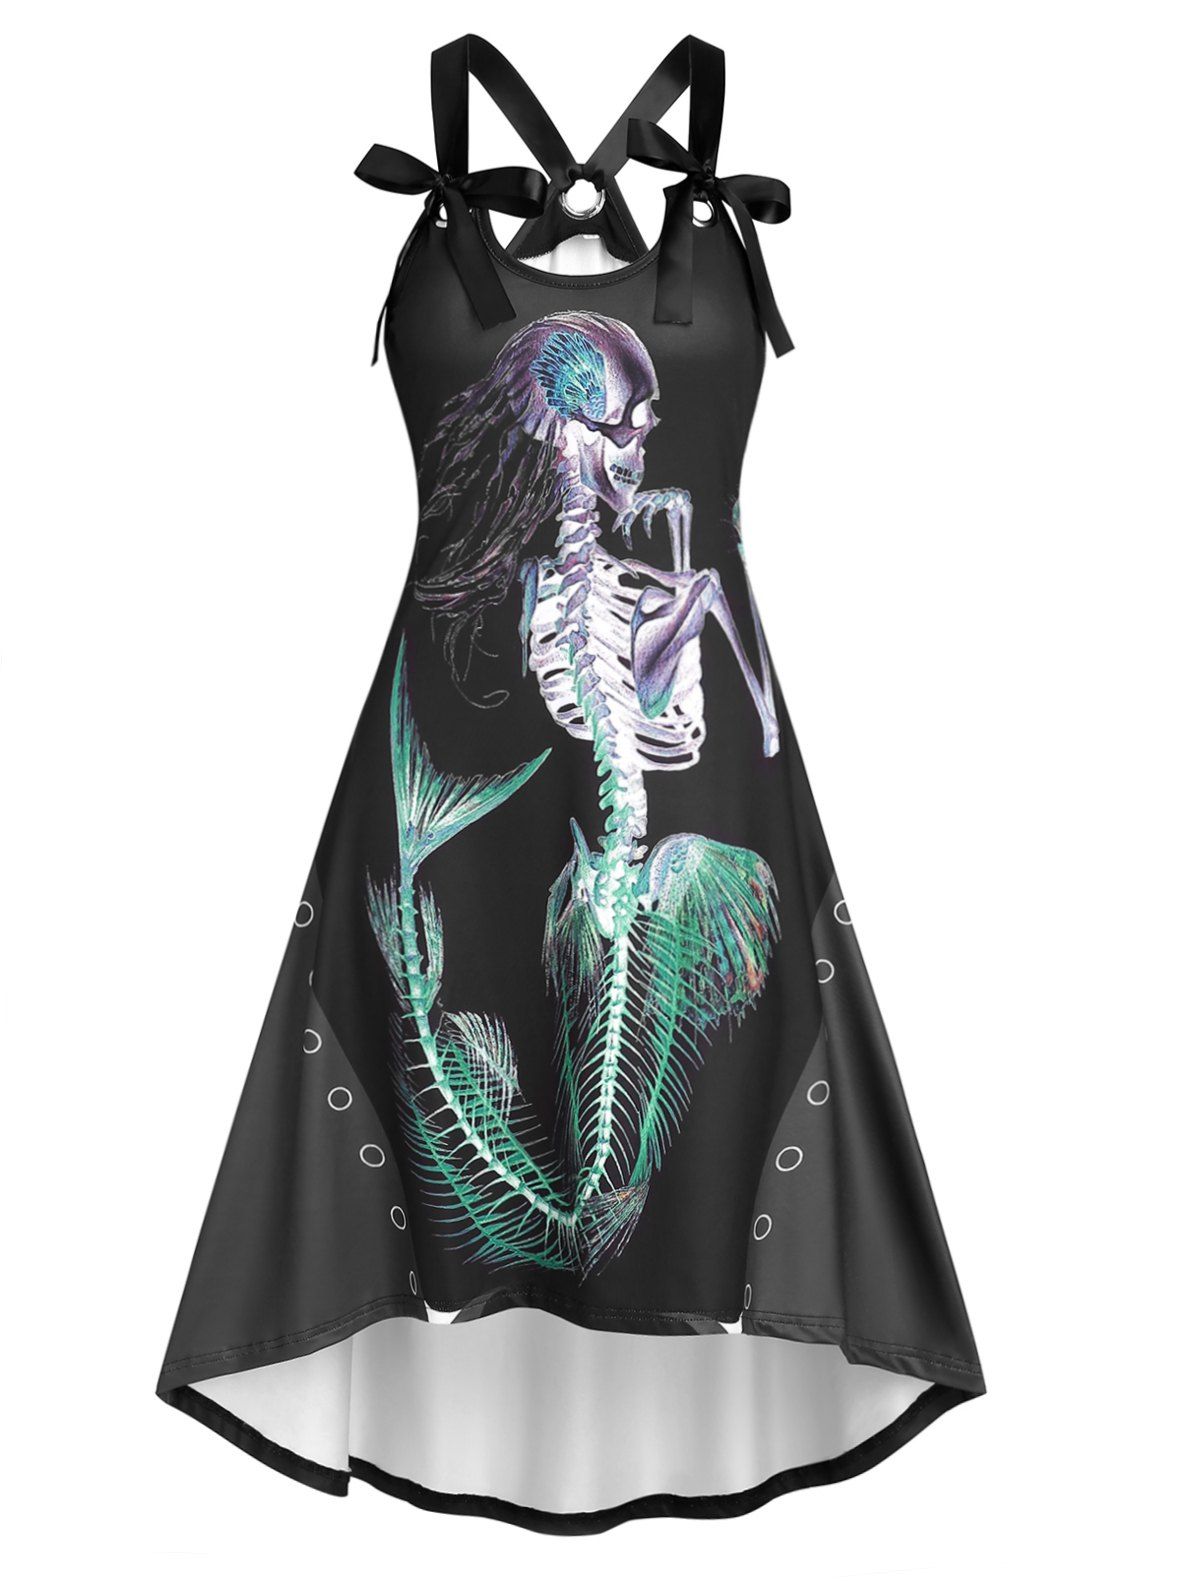 Mermaid Print Gothic A Line Dress Asymmetrical Hem Bowknot Strap Summer Dress - BLACK M